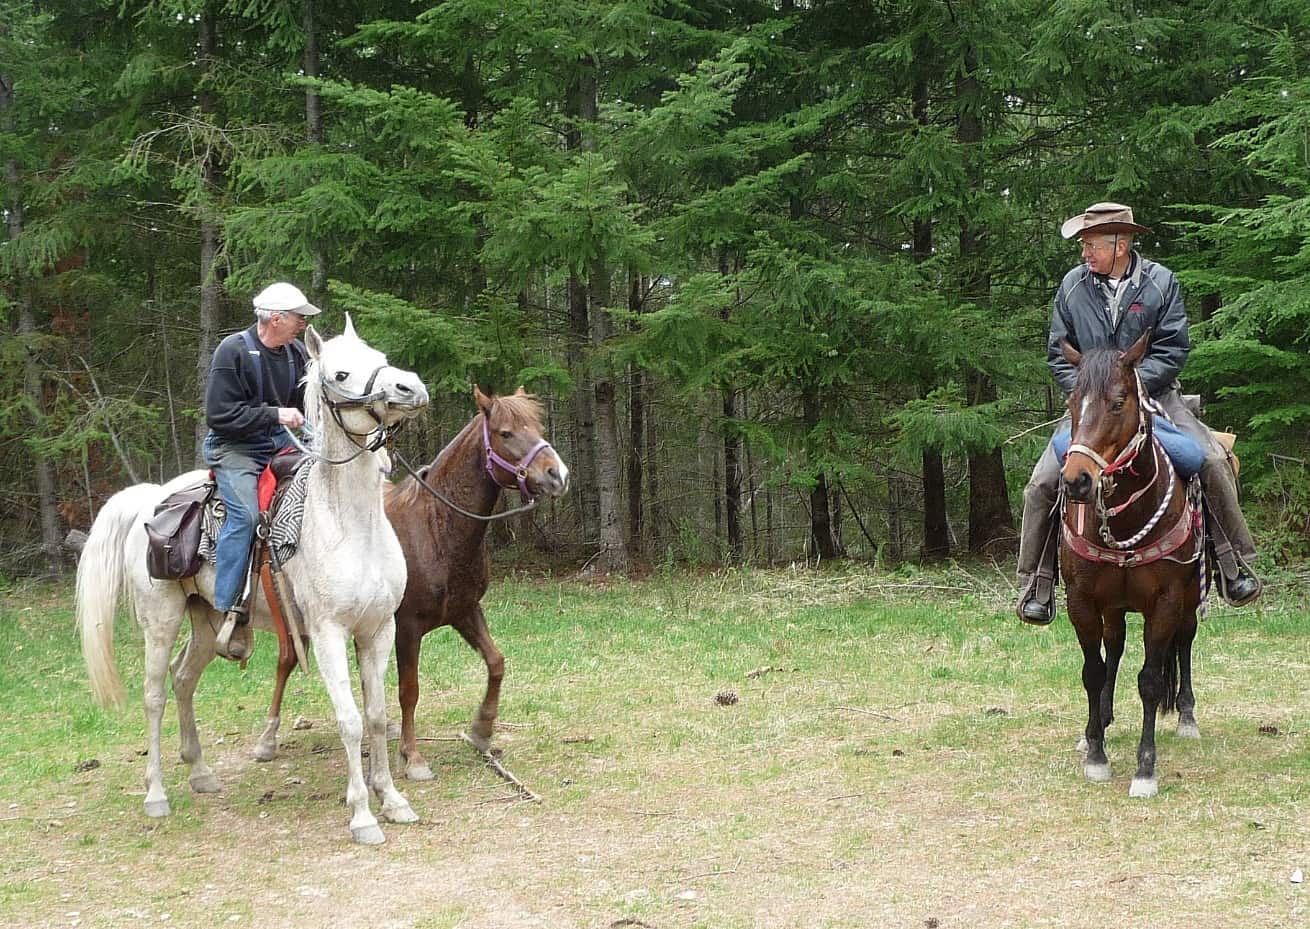 Equestrians on the way to Hugo Peak